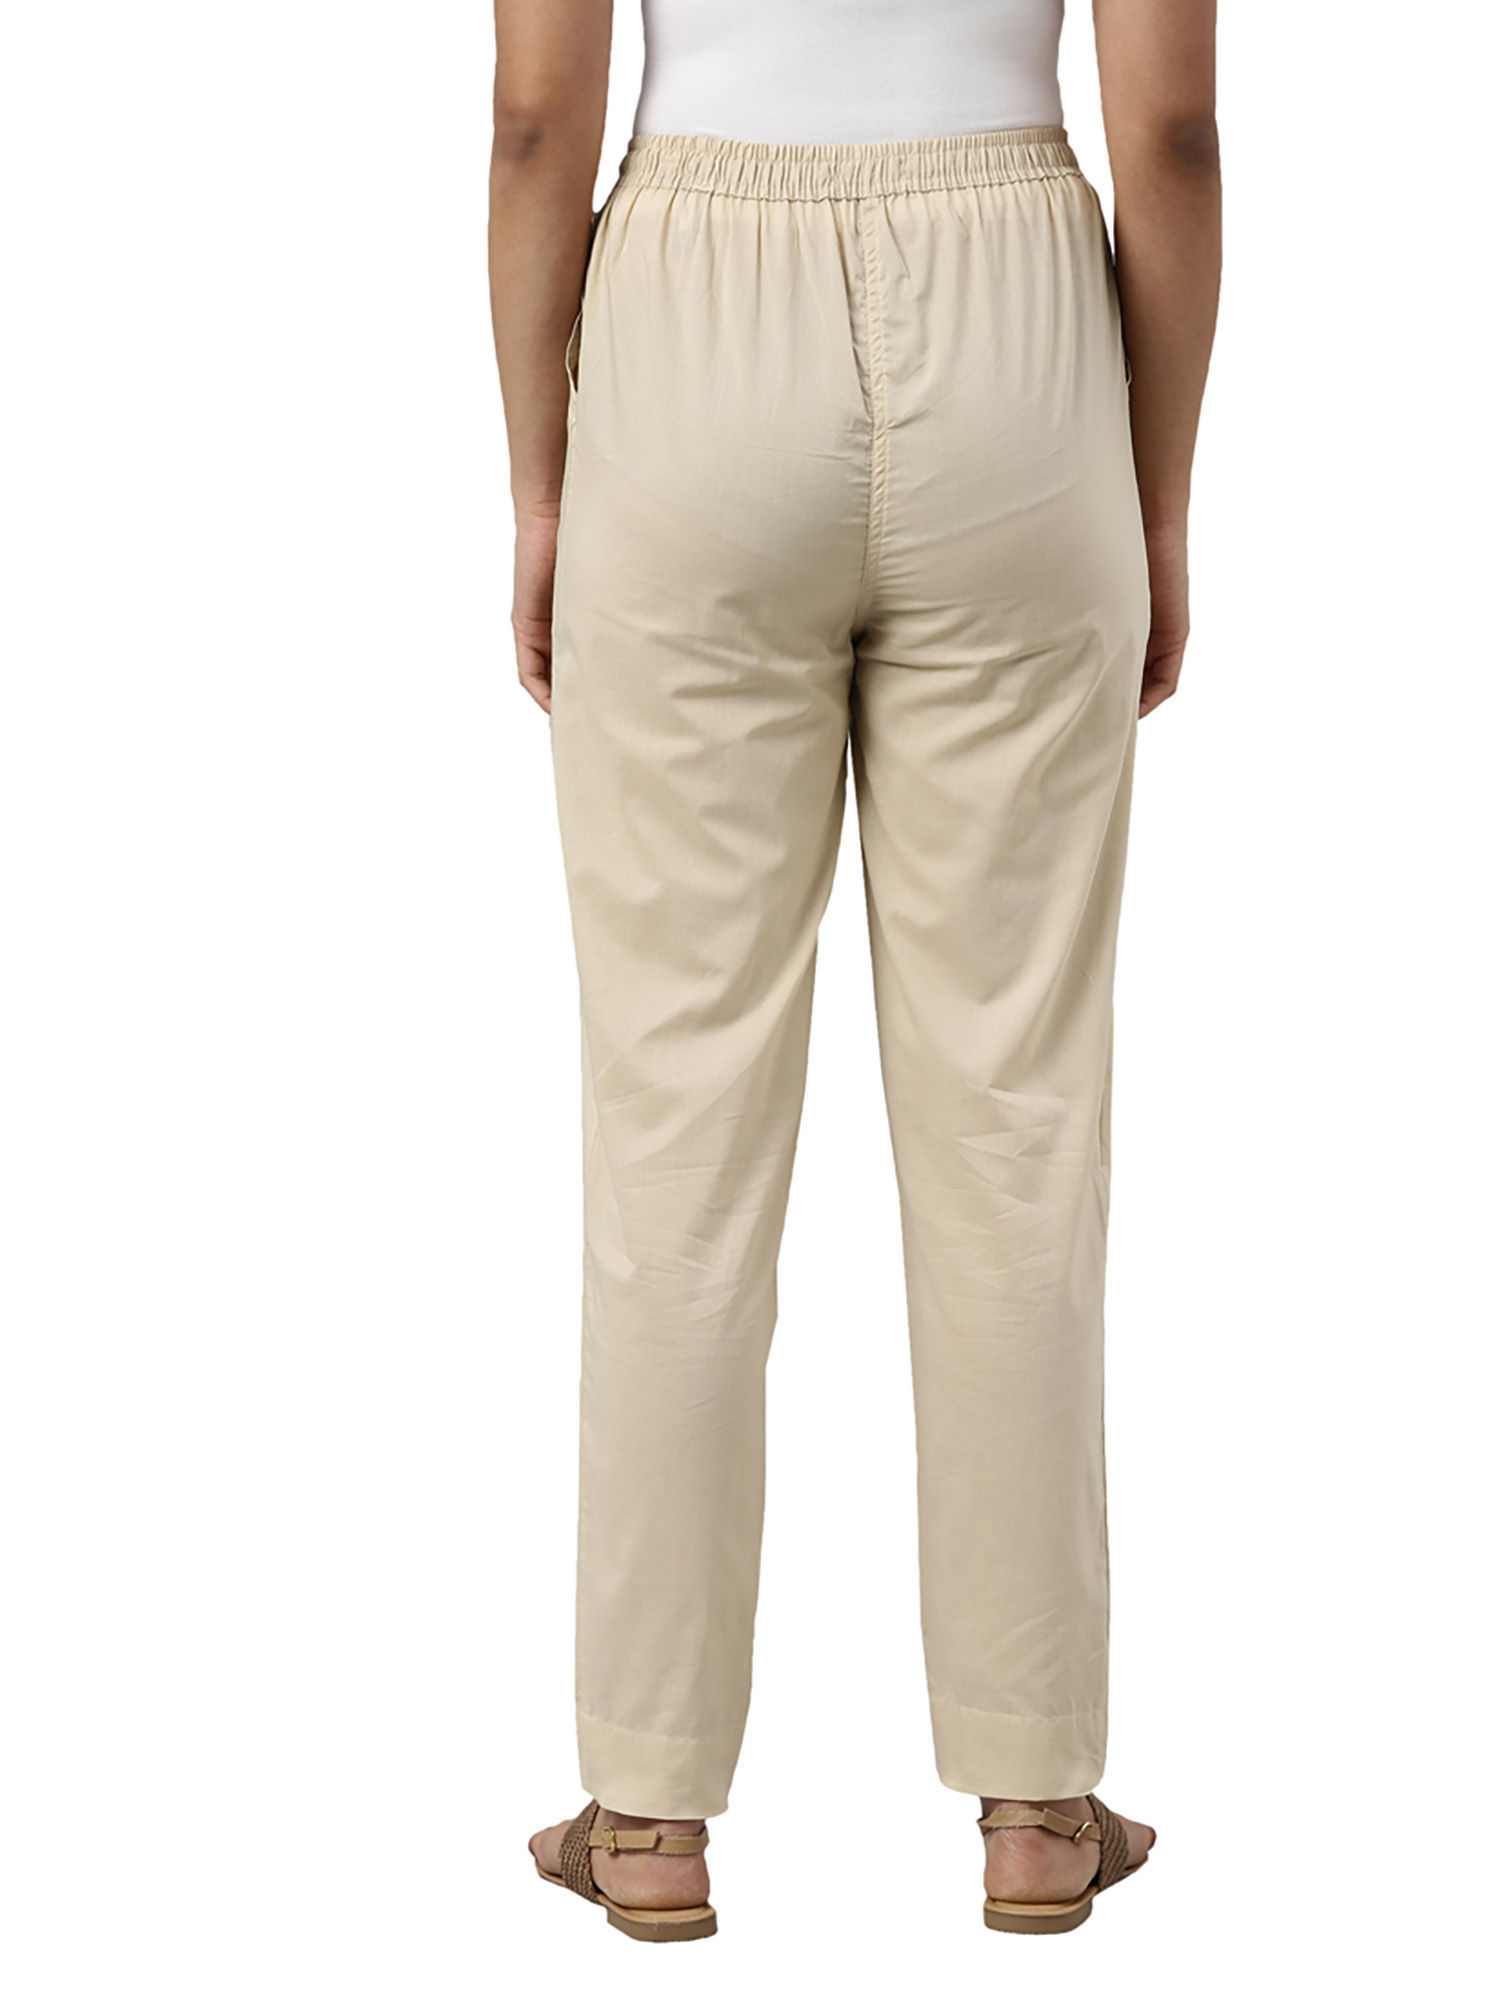 Buy Beige Track Pants for Women by Teamspirit Online | Ajio.com